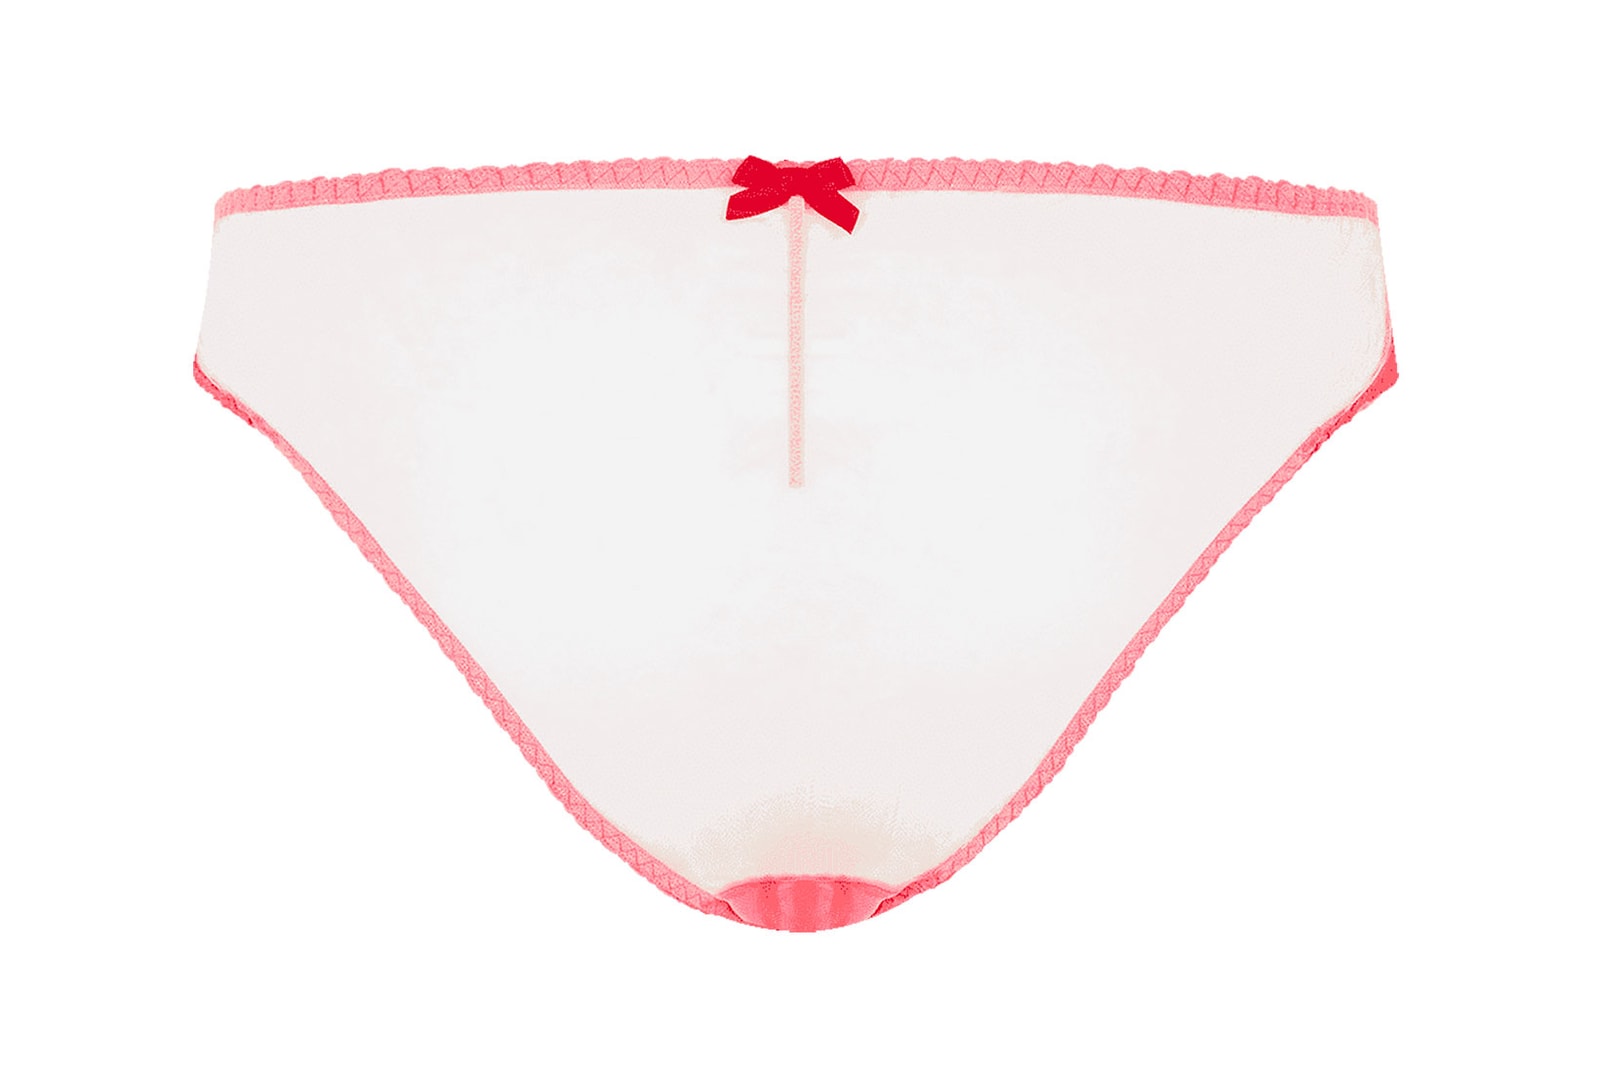 savage x fenty rihanna agent provocateur lingerie bra underwear stockings pink red